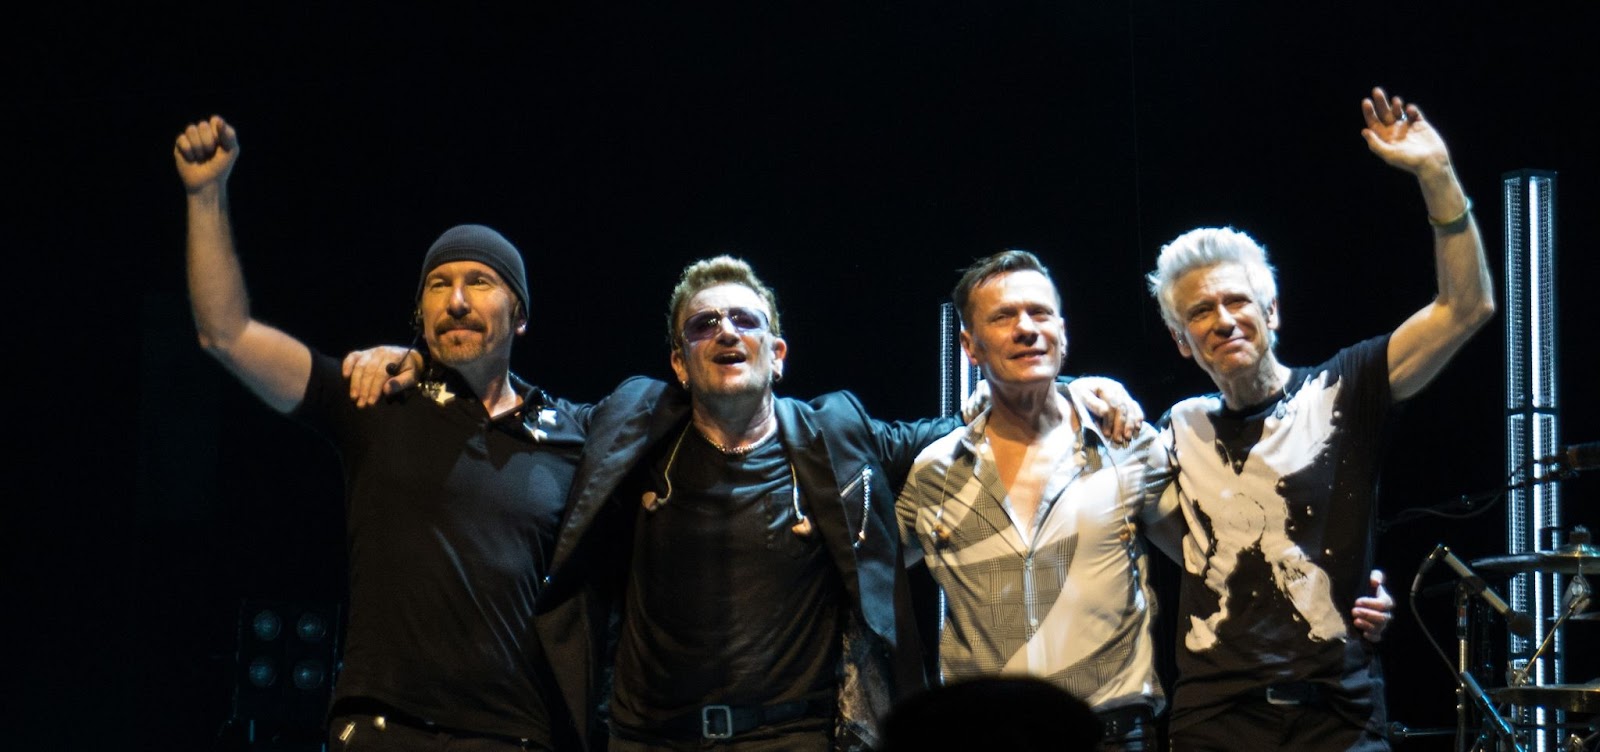 Irish singers U2